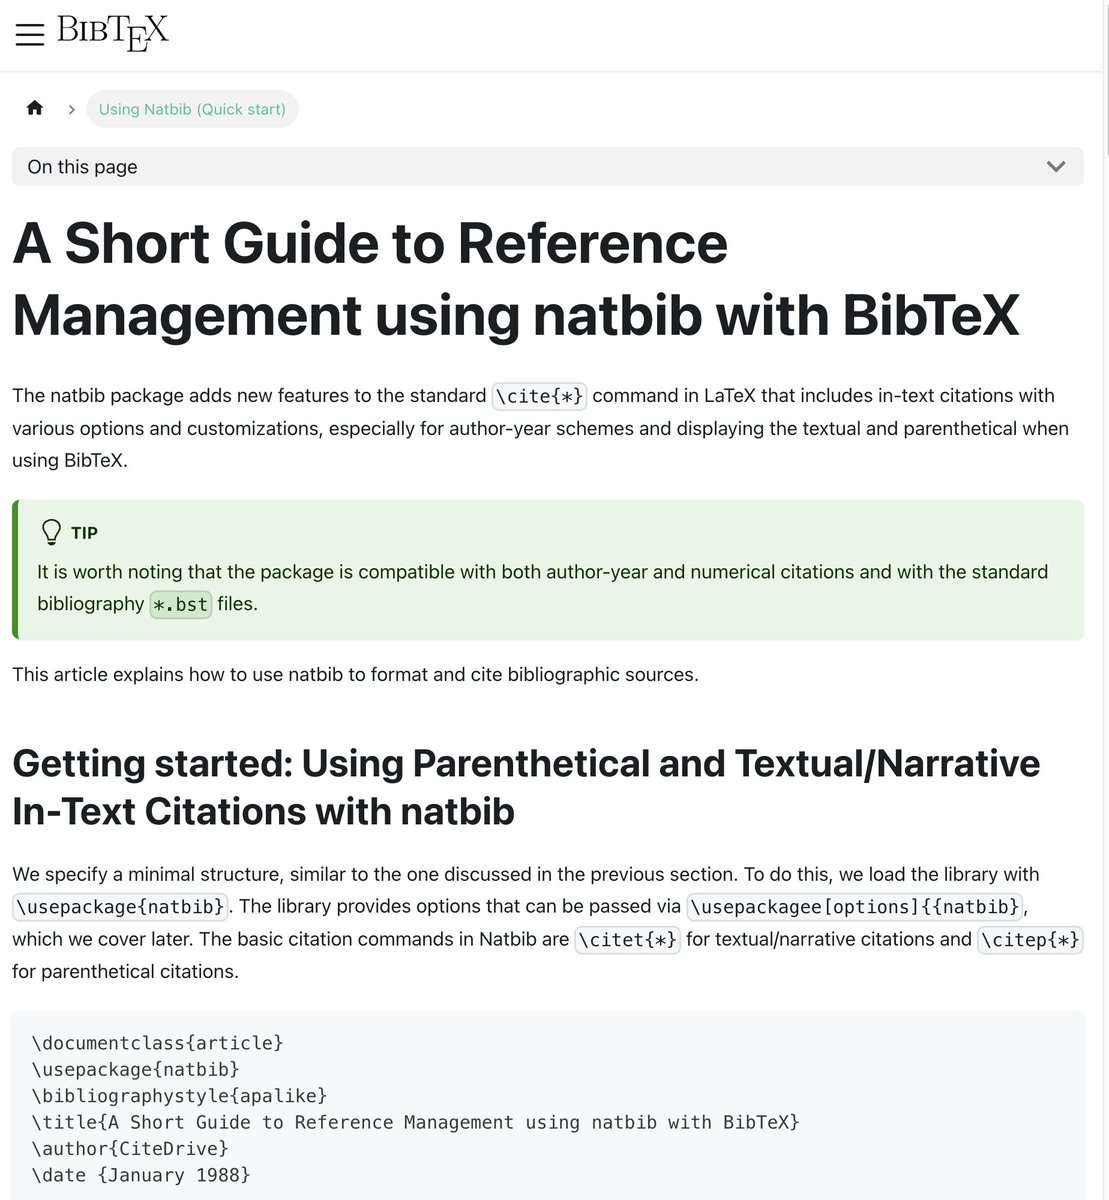 A Short Guide to Reference Management using natbib with BibTeX bibtex.eu/natbib/ #Natbib #Overleaf #TeXLaTeX #BibTeX #BibLaTeX #CiteDrive #RStats #Rmarkdown #quartopub #referencemanagement